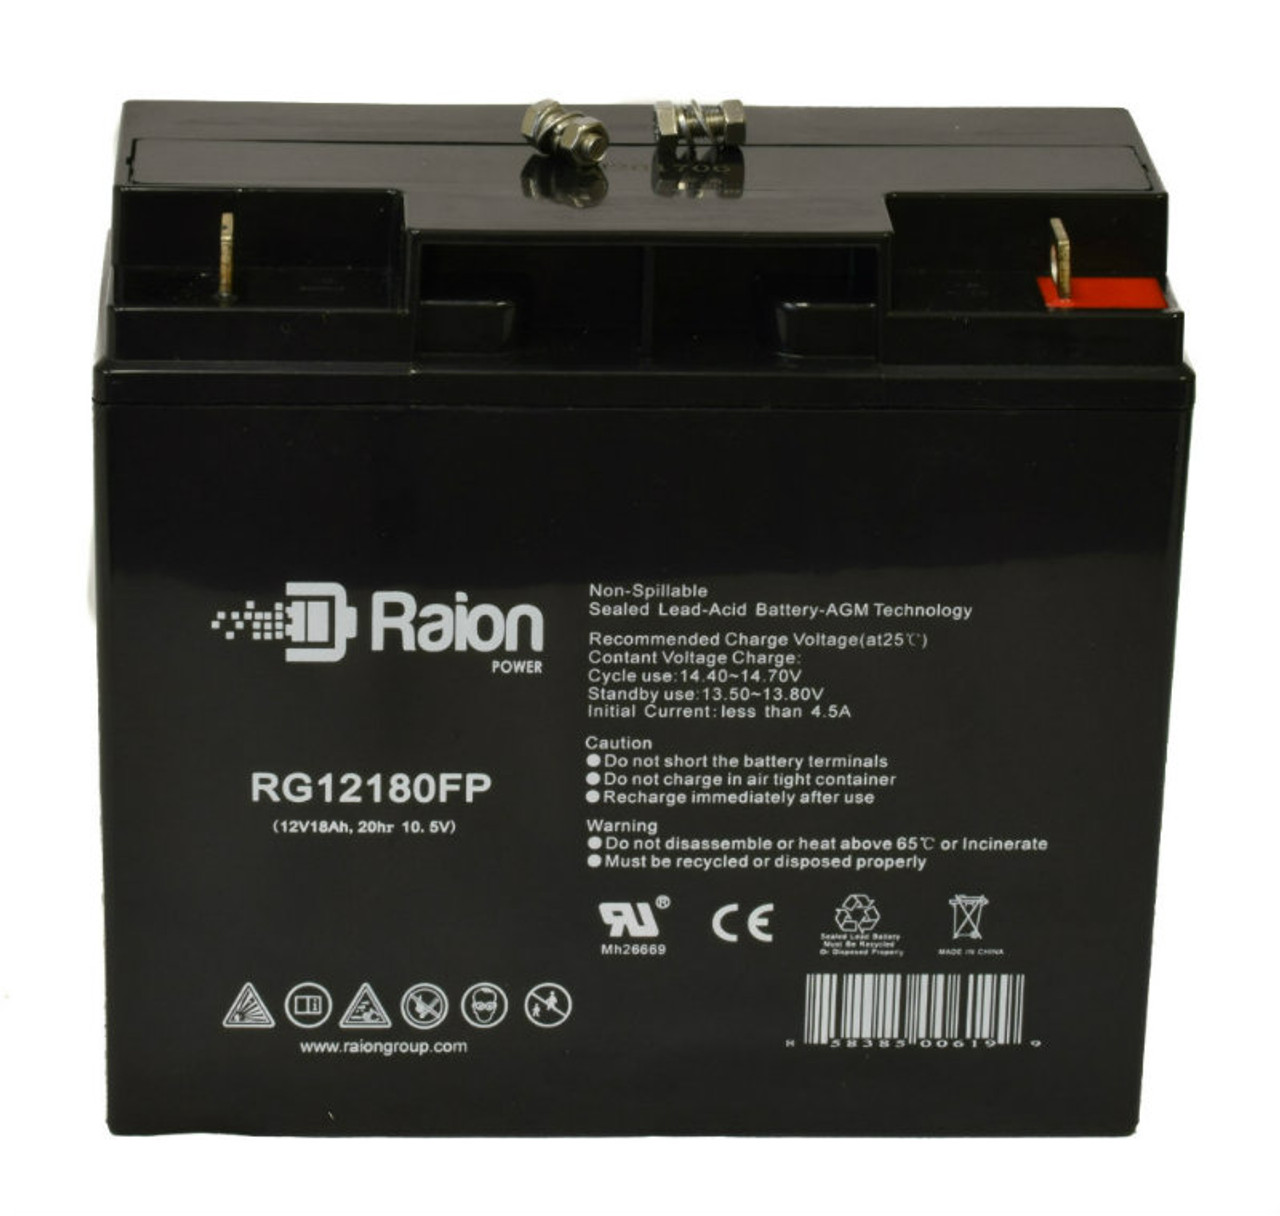 Raion Power RG12180FP 12V 18Ah Lead Acid Battery for SeaWill SW12170